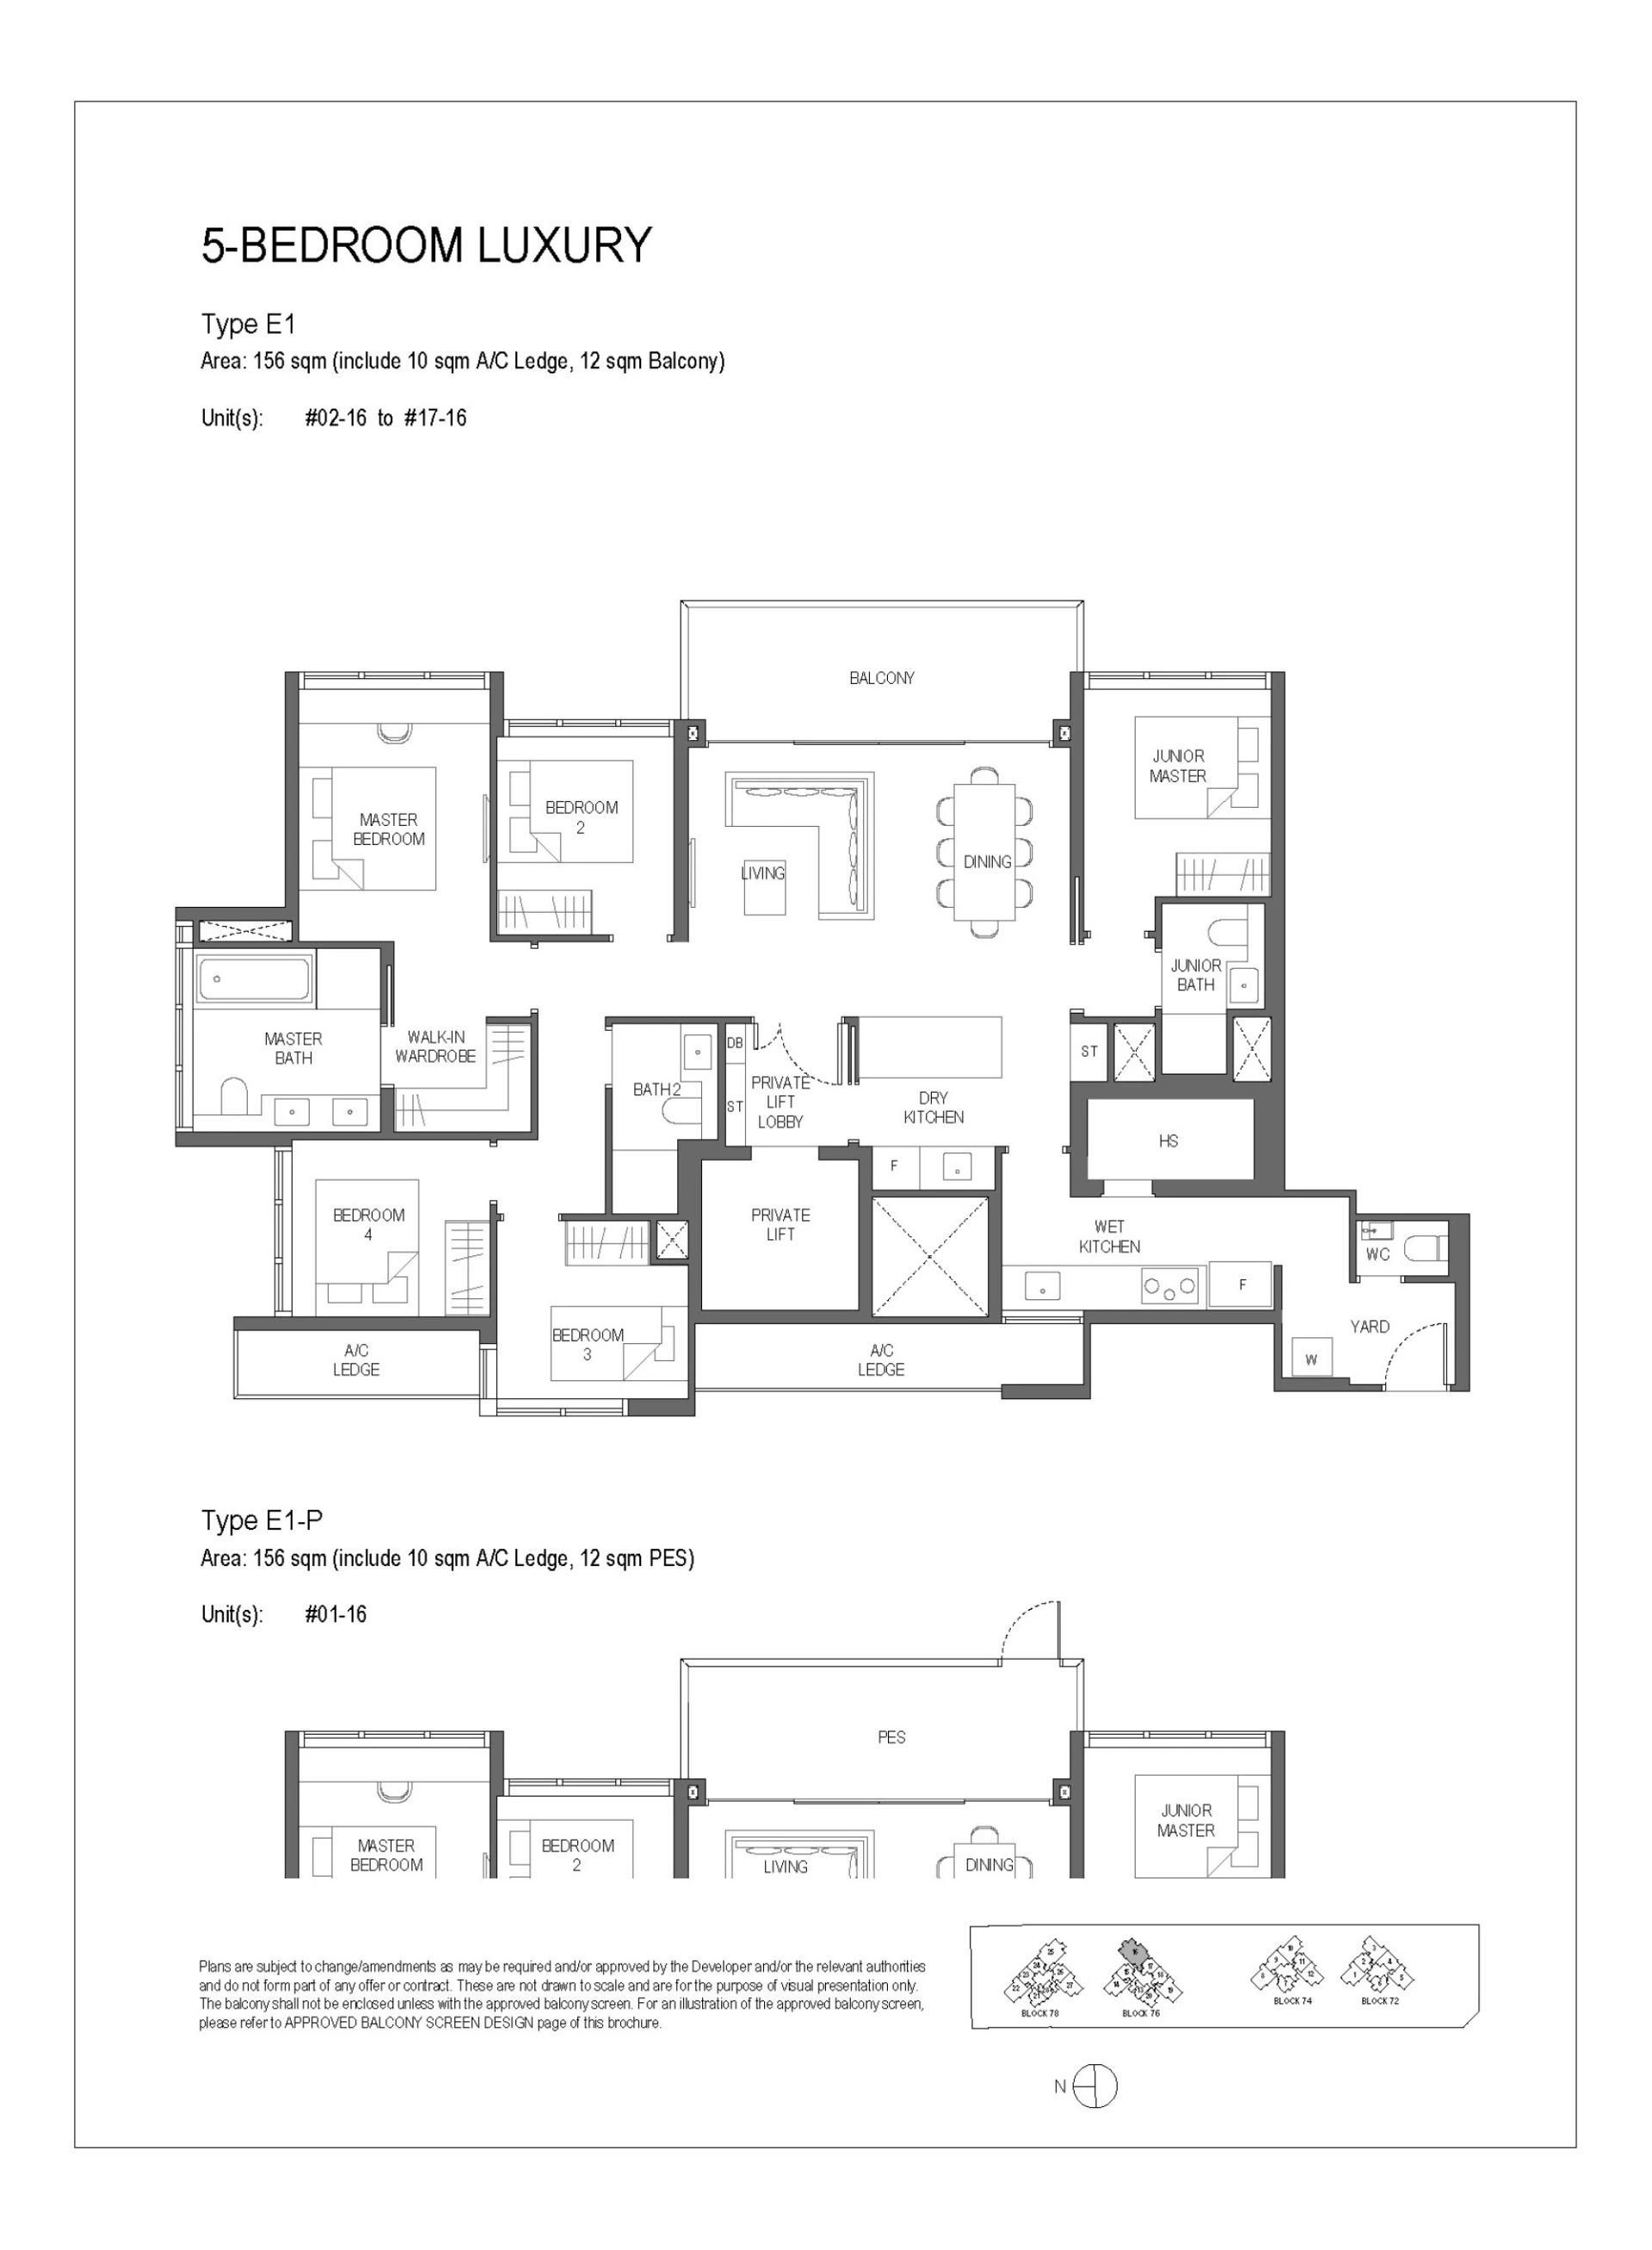 SORA 5BR 81 5 bedroom floorplan layout